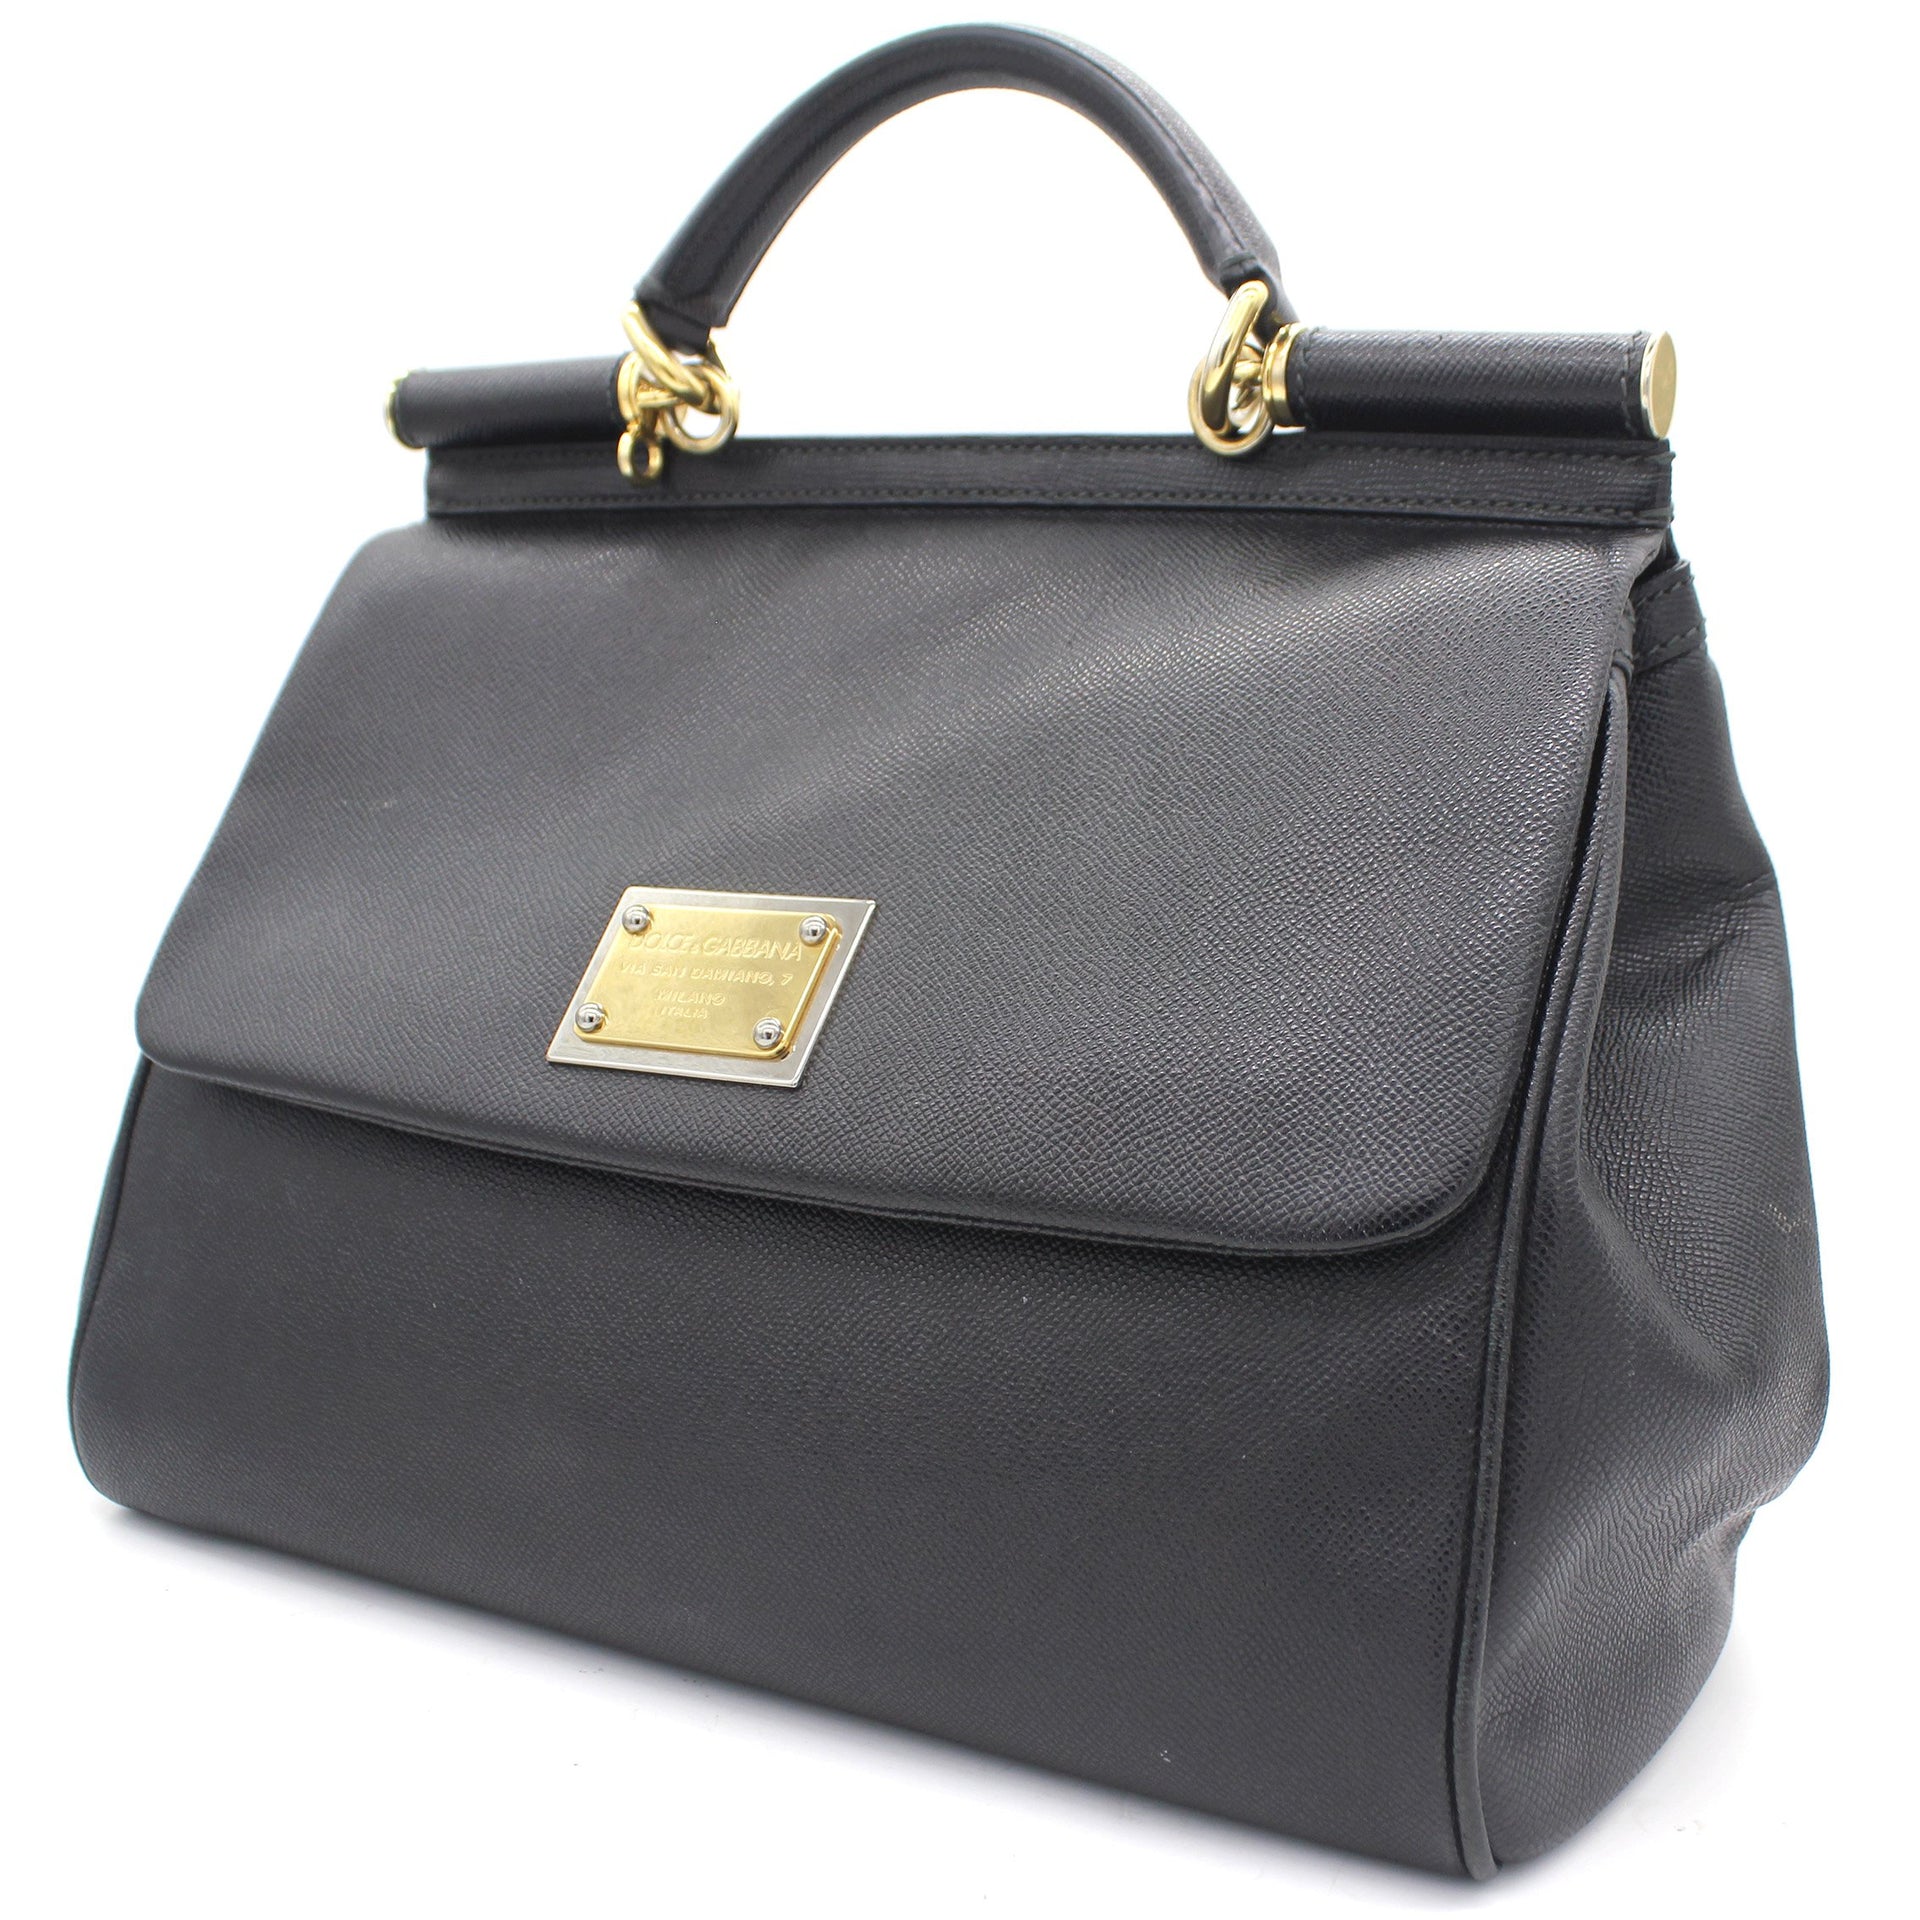 Dolce & Gabbana Sicily Small Leather Shoulder Bag